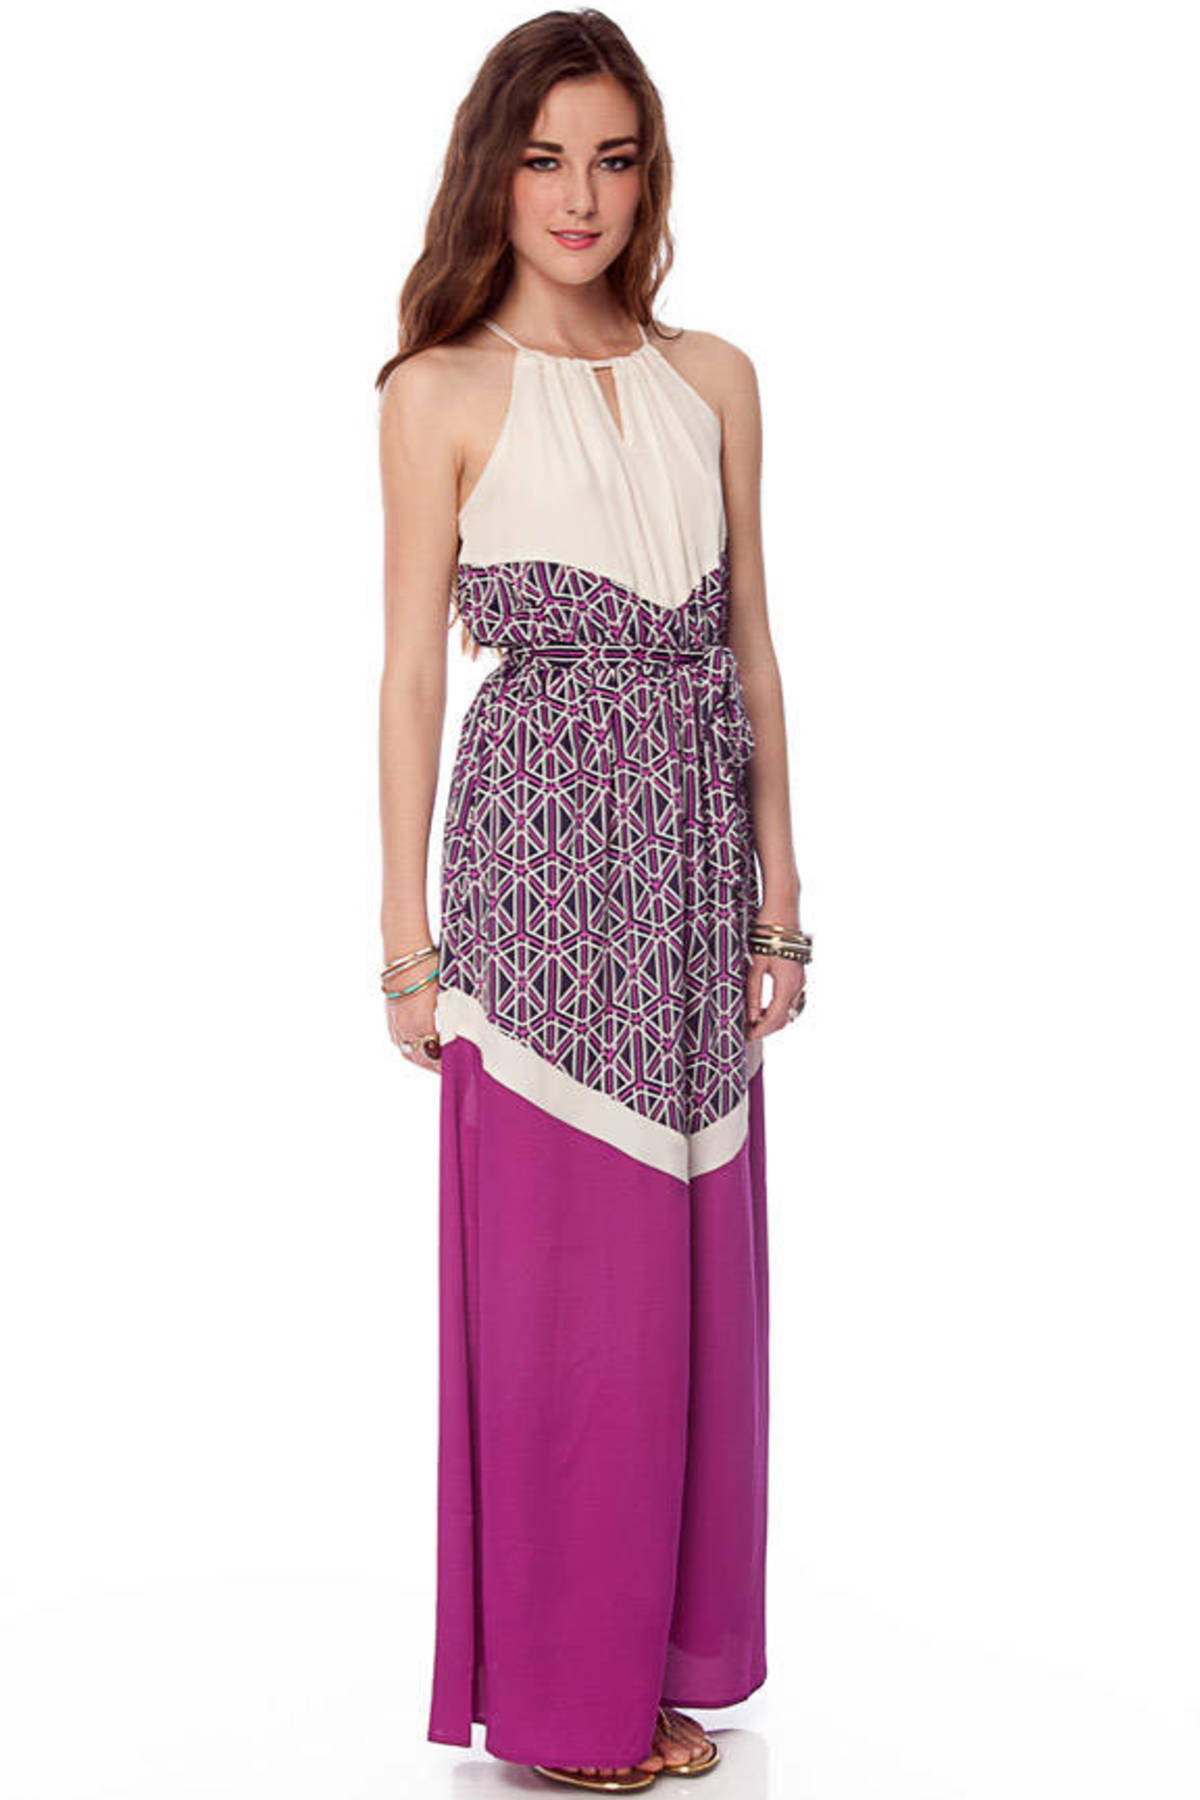 Matrix Maxi Dress in Violet - $23 | Tobi US